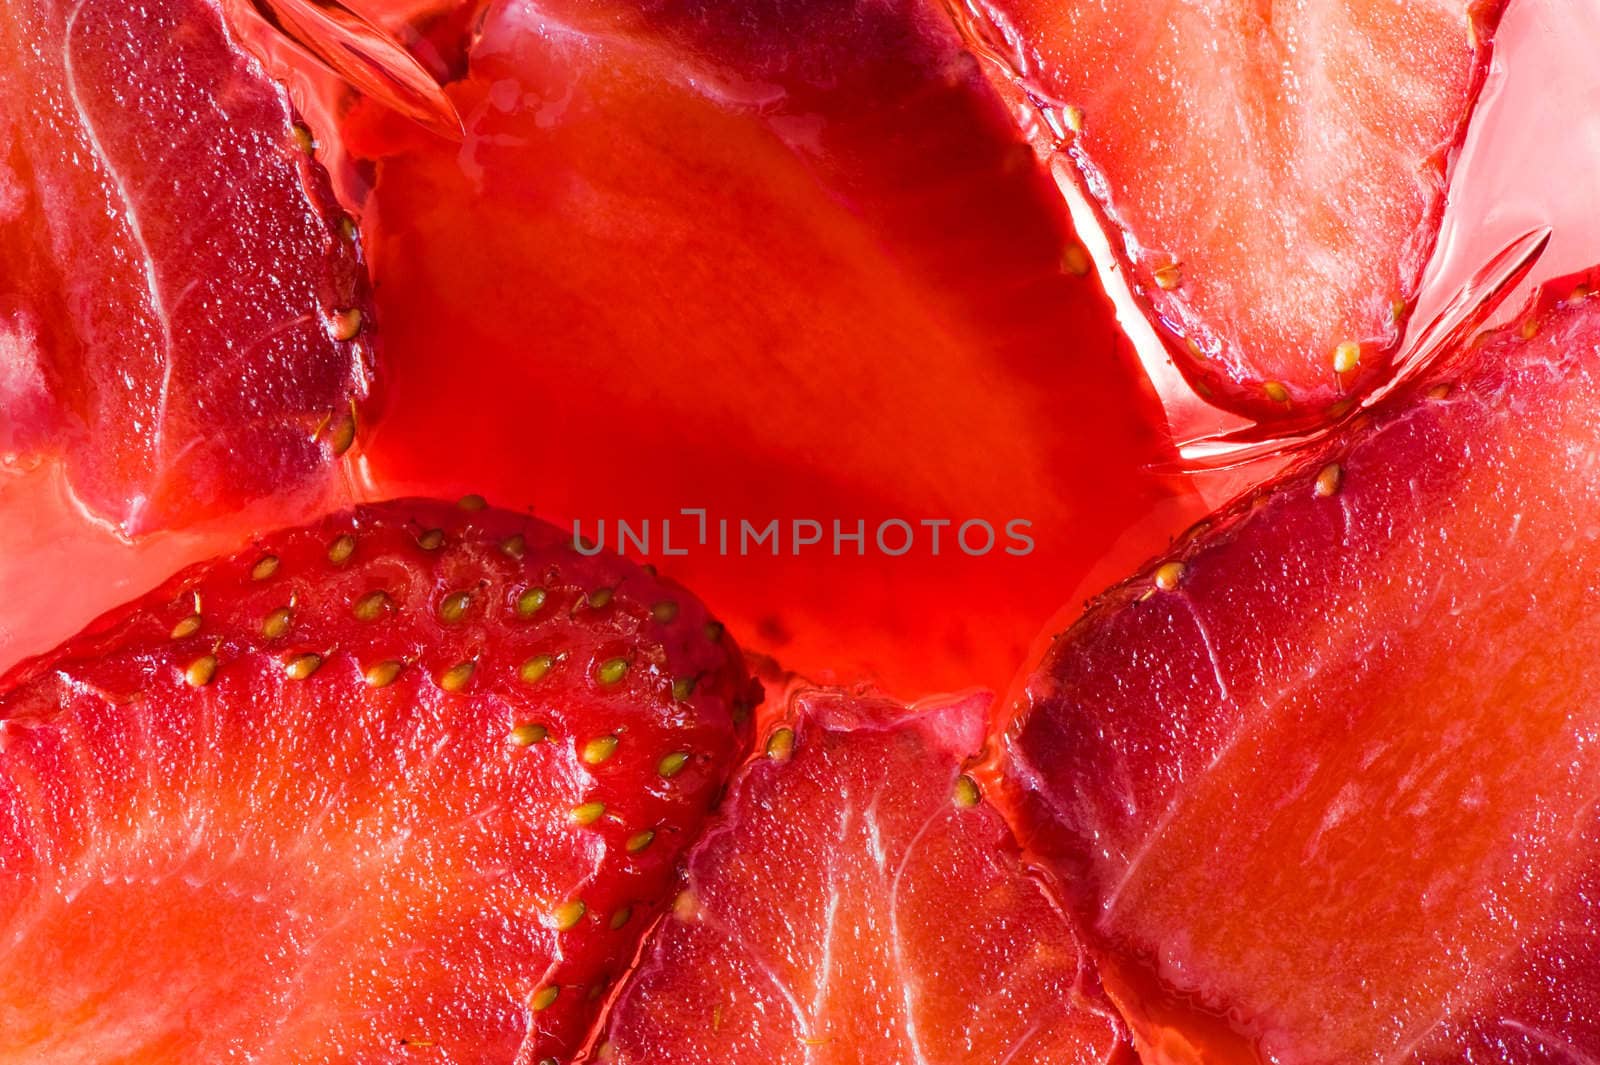 Strawberry jelly dessert by akarelias